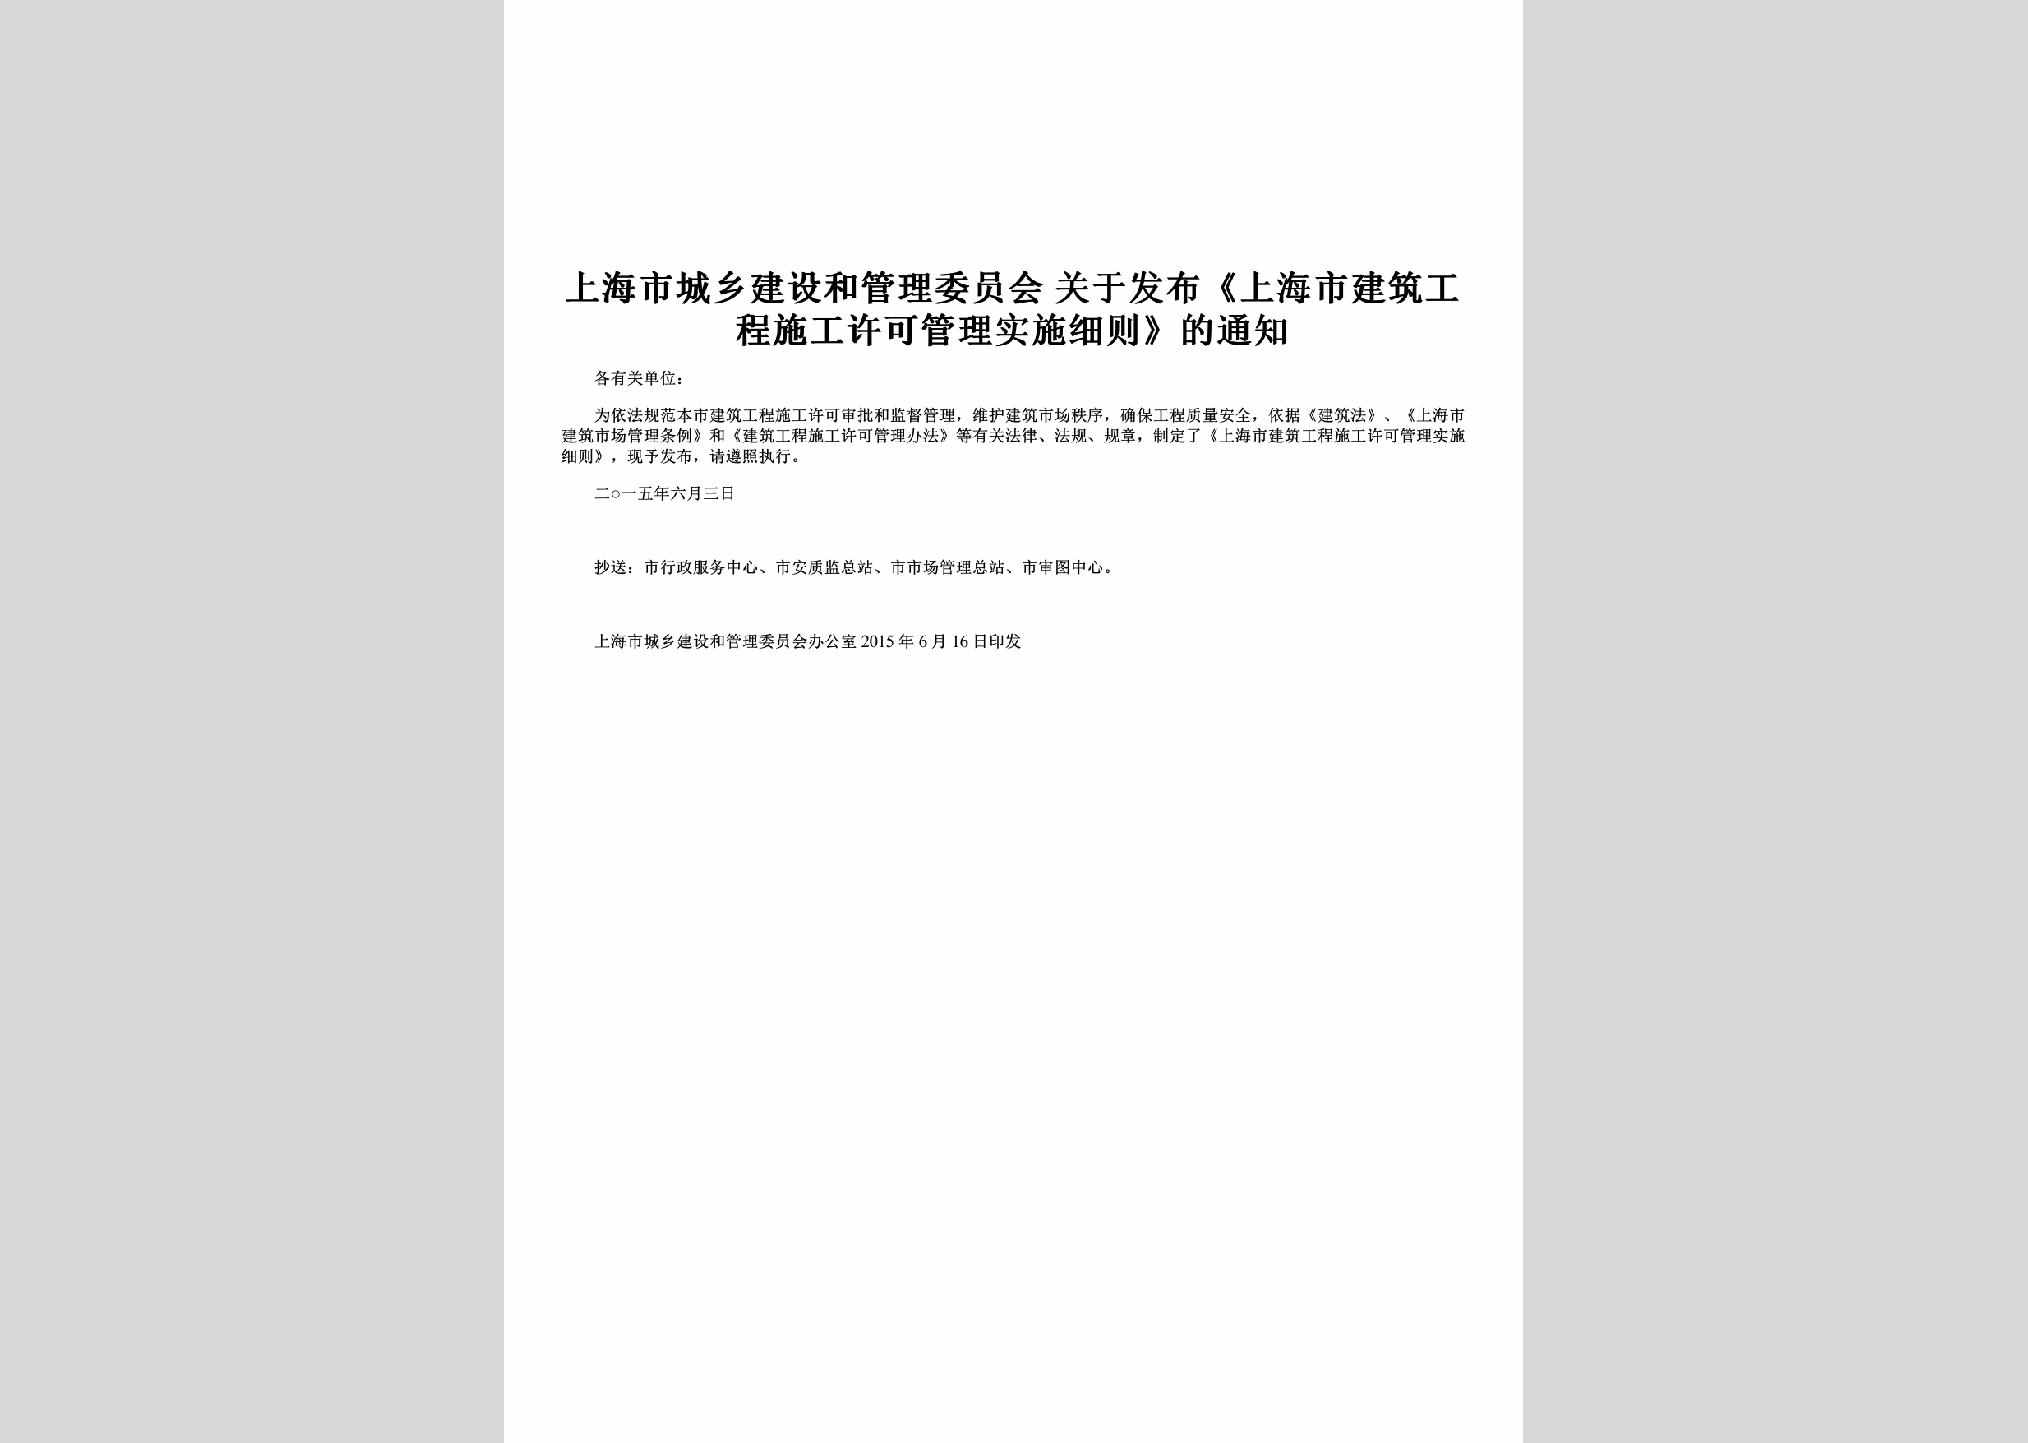 SH-GCSGSSTZ-2015：关于发布《上海市建筑工程施工许可管理实施细则》的通知